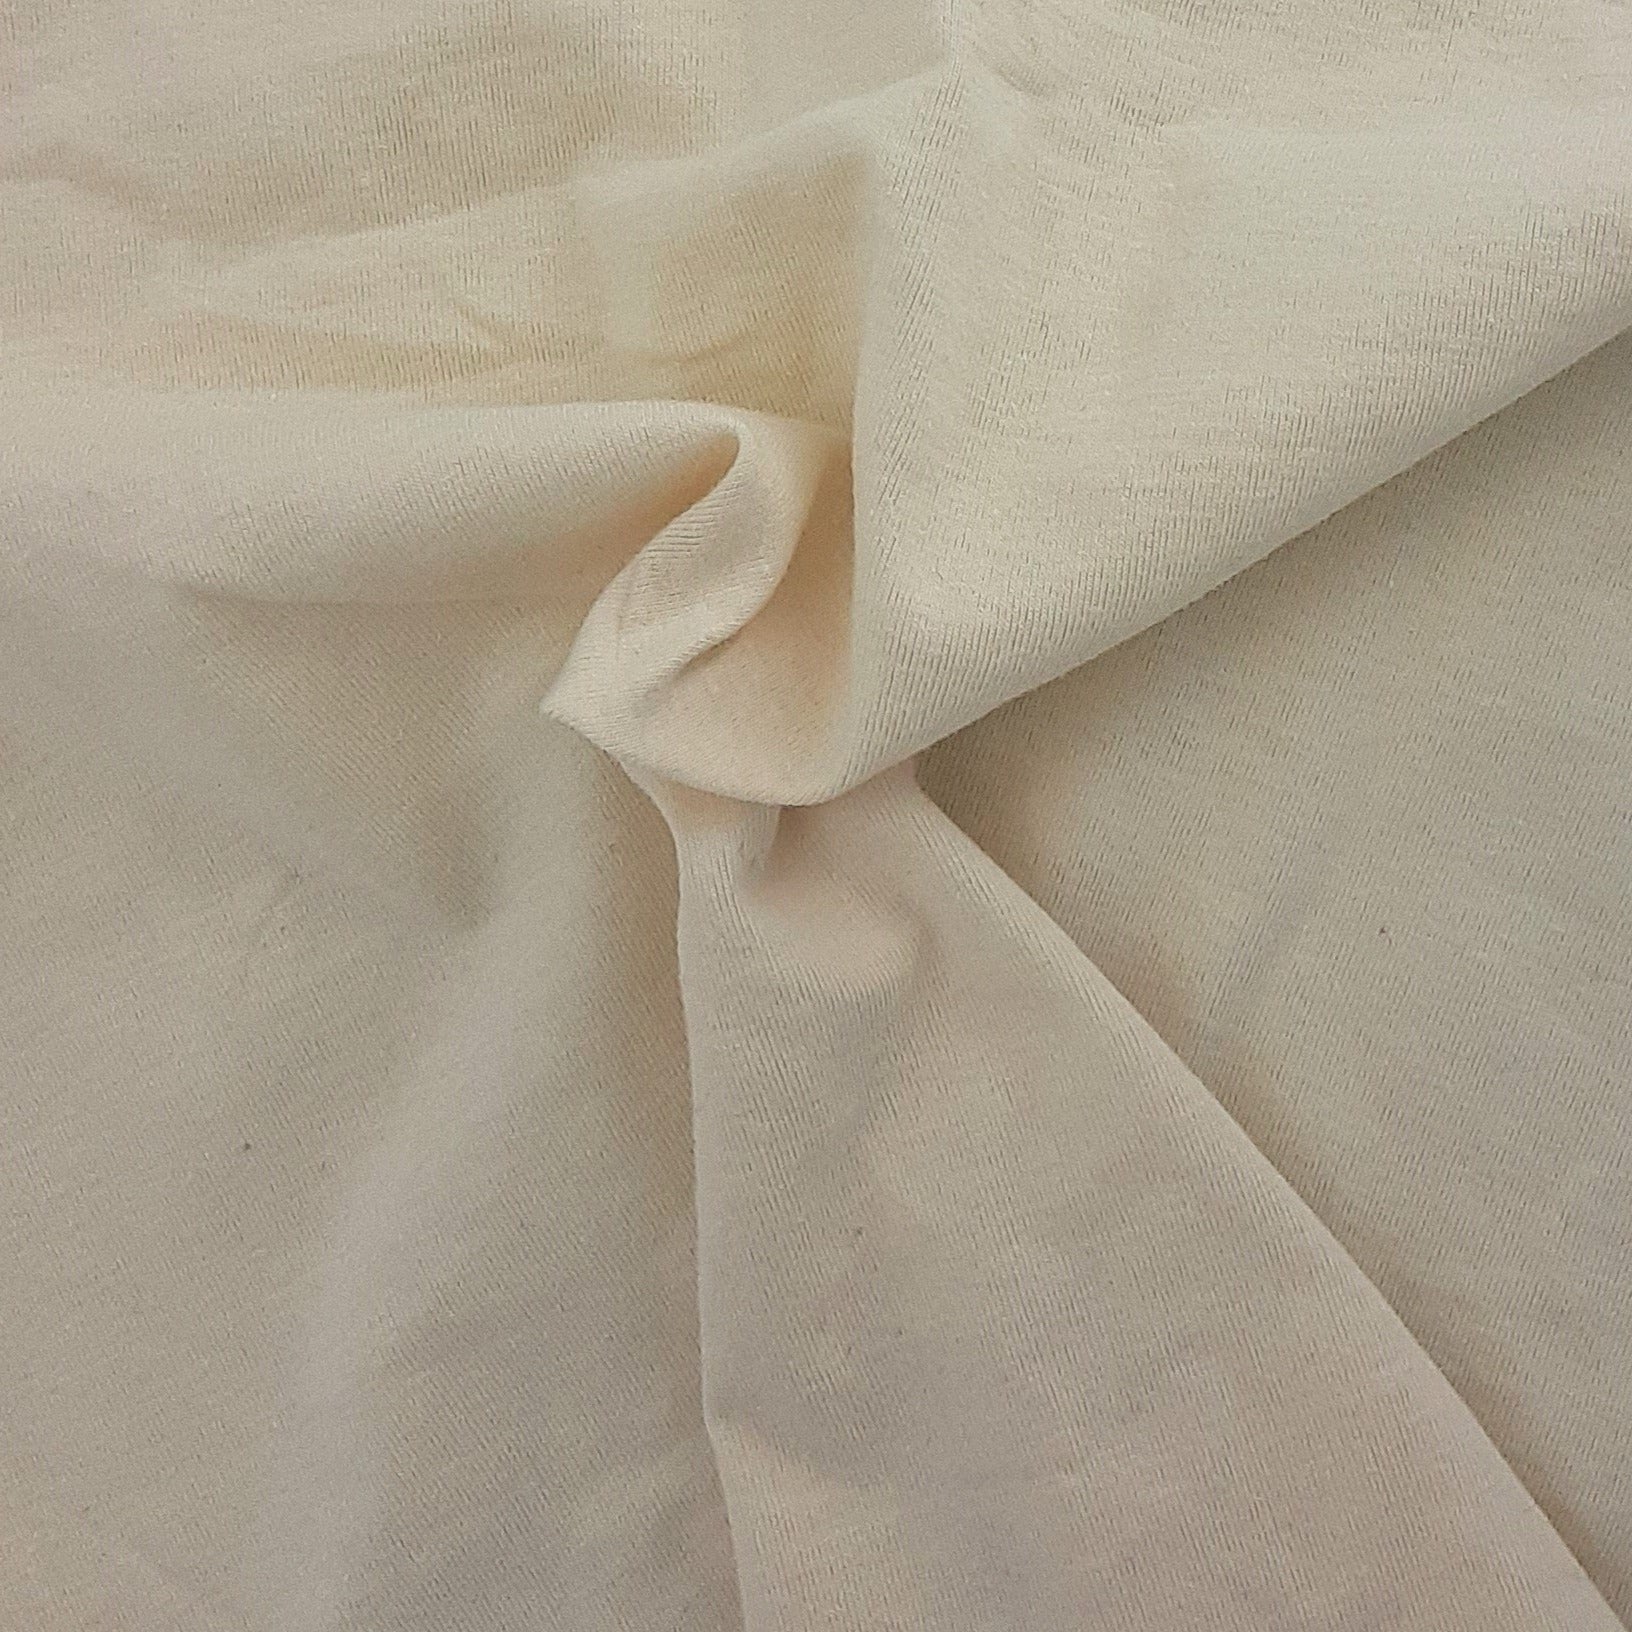 Cream #S Cotton Spandex Jersey 7 Ounce Knit Fabric - SKU 6840B